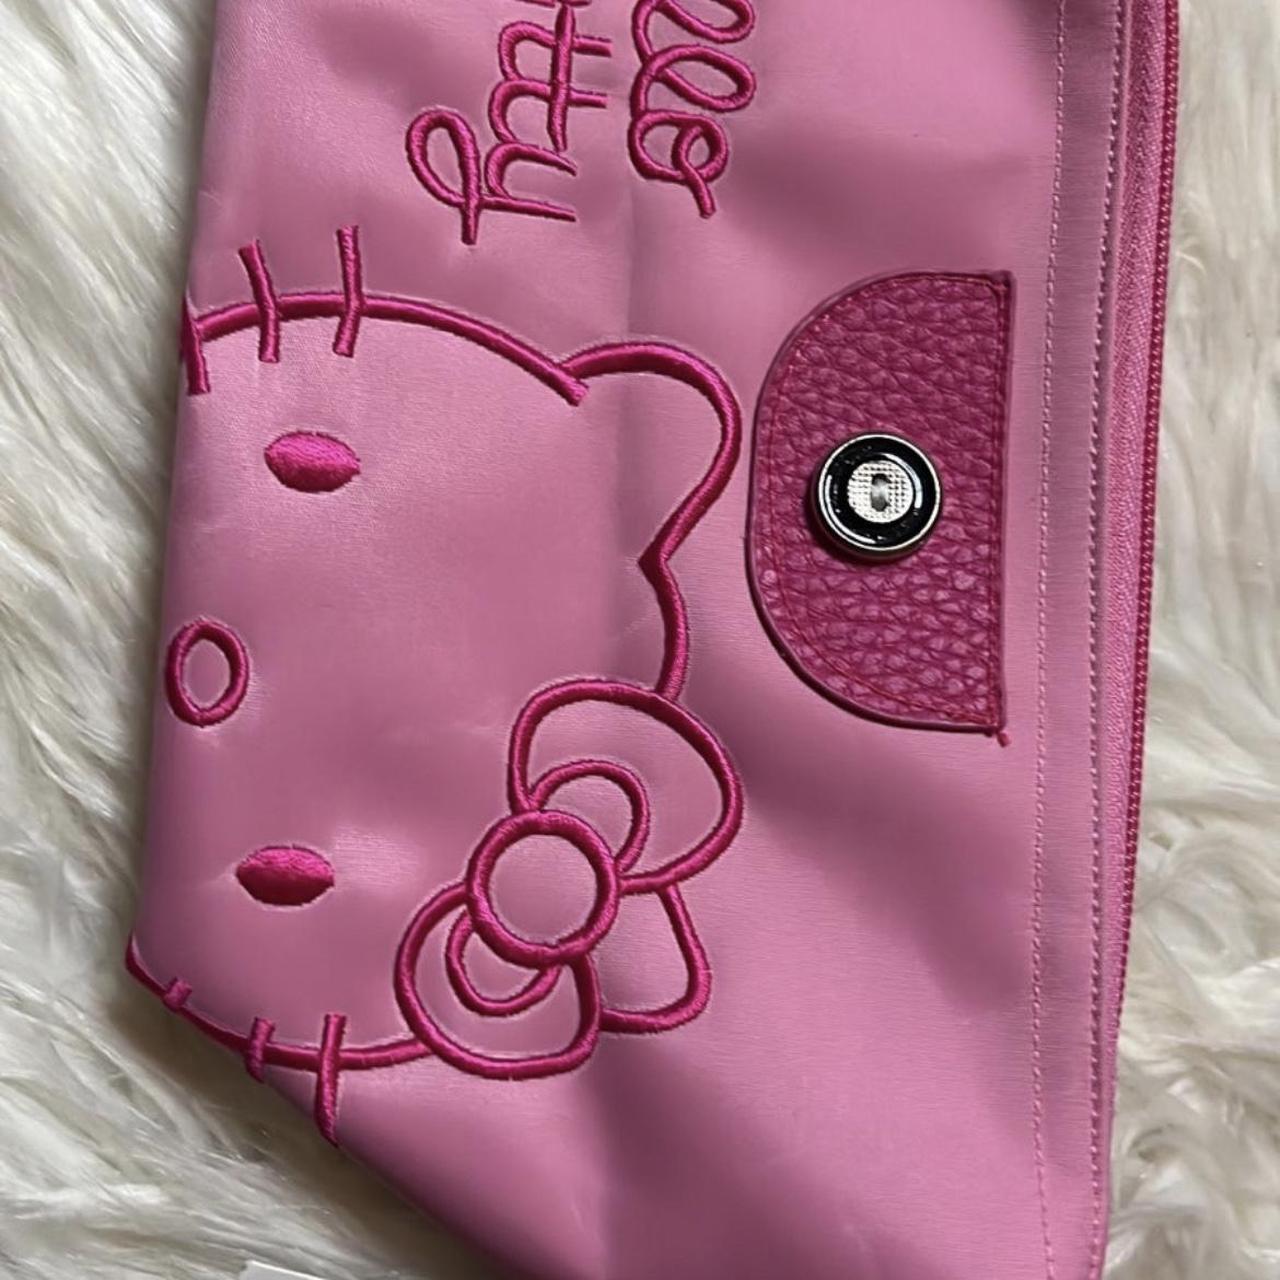 Hello Kitty makeup bag brand new so cute #sanrio... - Depop